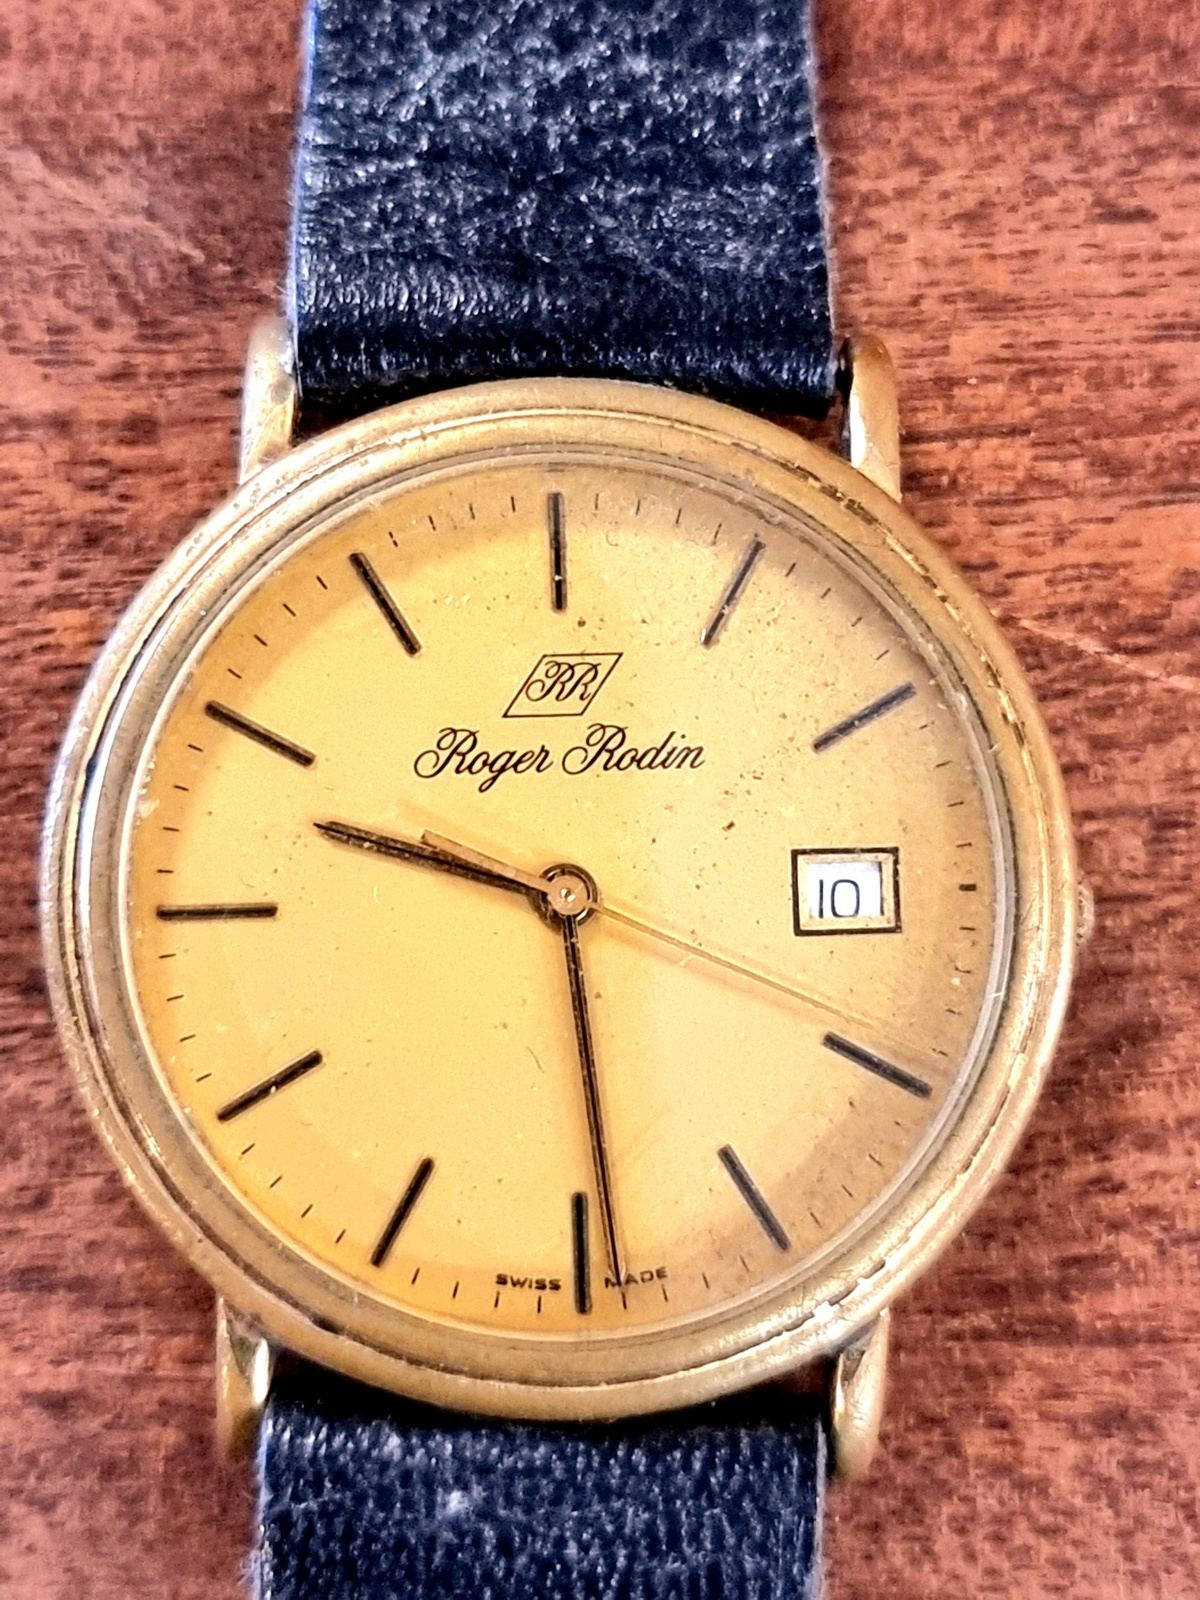 Vintage Roger Rodin Watch